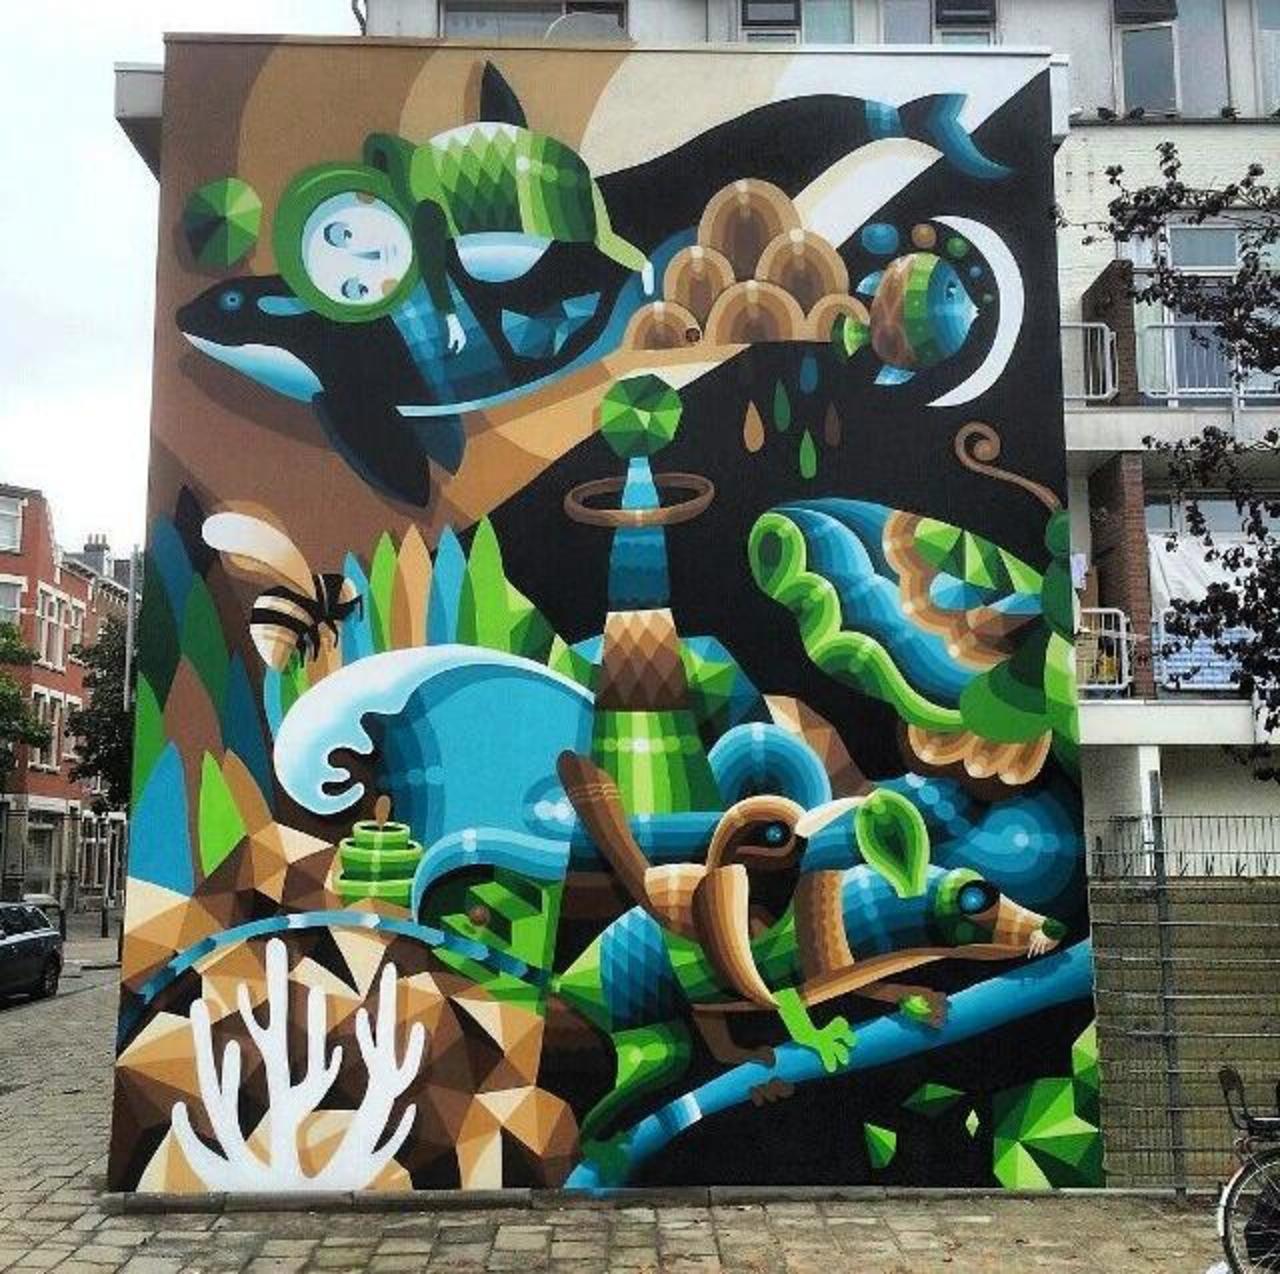 "@HubStreetArt
Rotterdam #streetart #art https://t.co/OHZirZdYie #eelcovanderberg #virus #murual #wall #graffiti #artist"